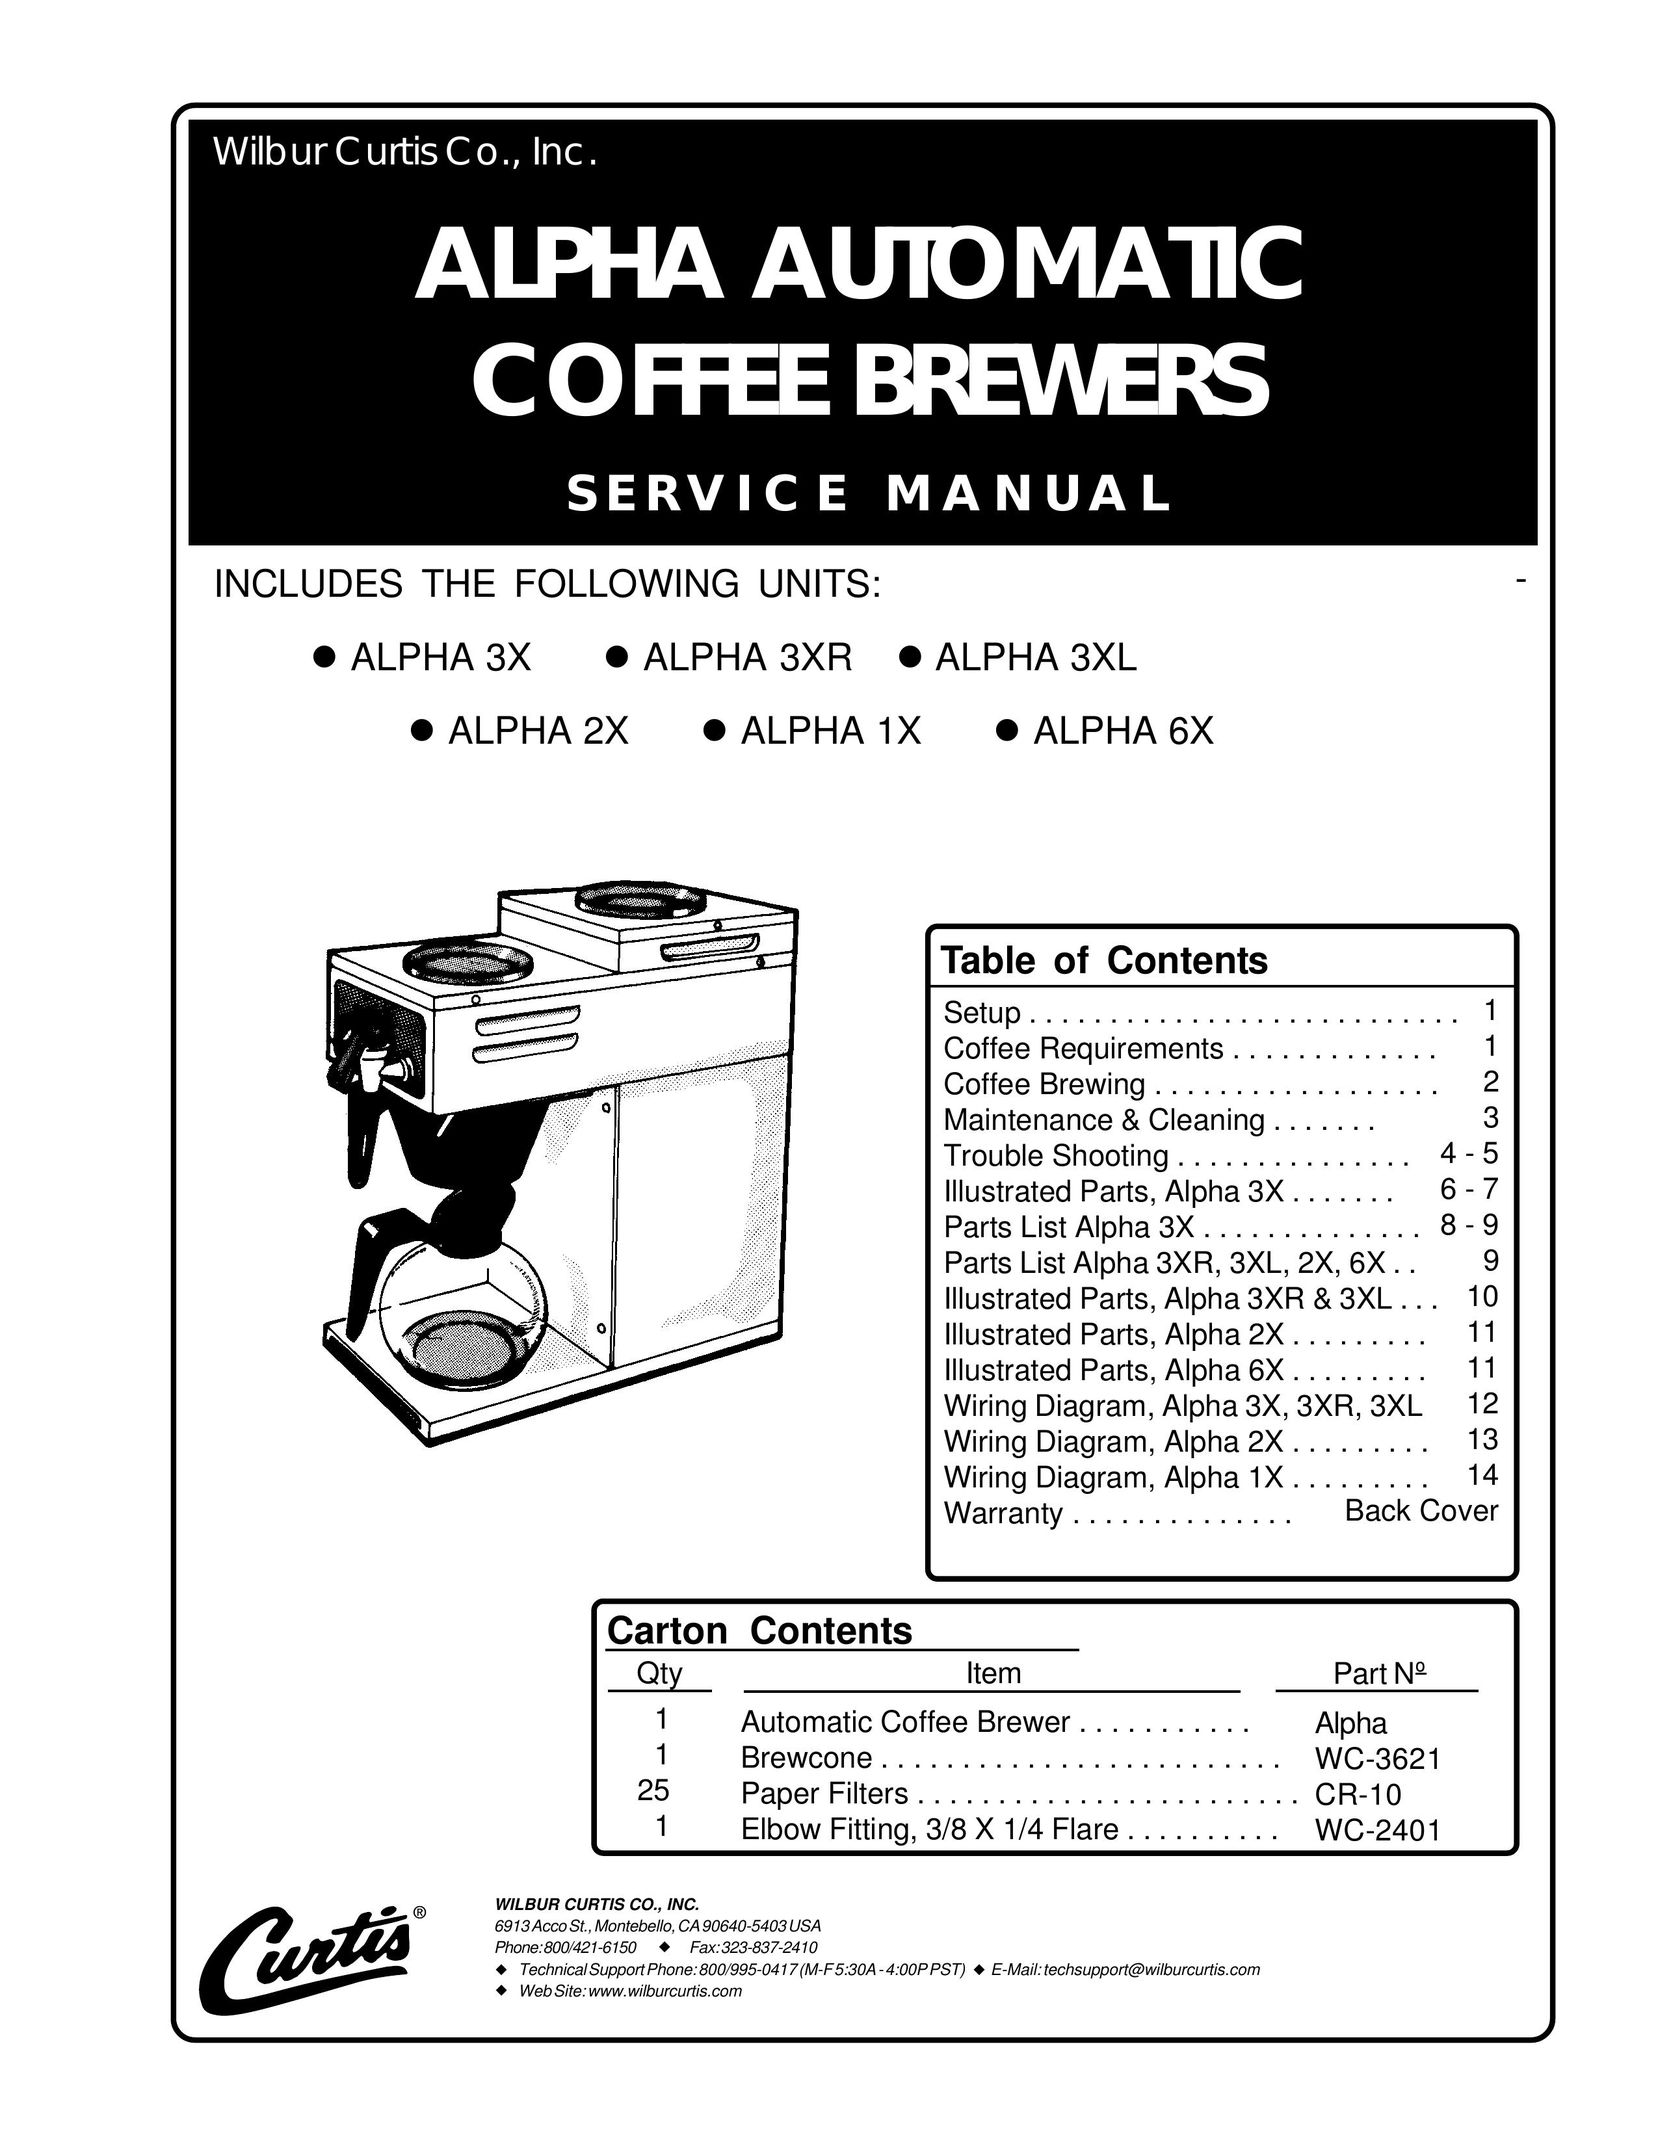 Wibur Curtis Company ALPHA 3XL Coffeemaker User Manual